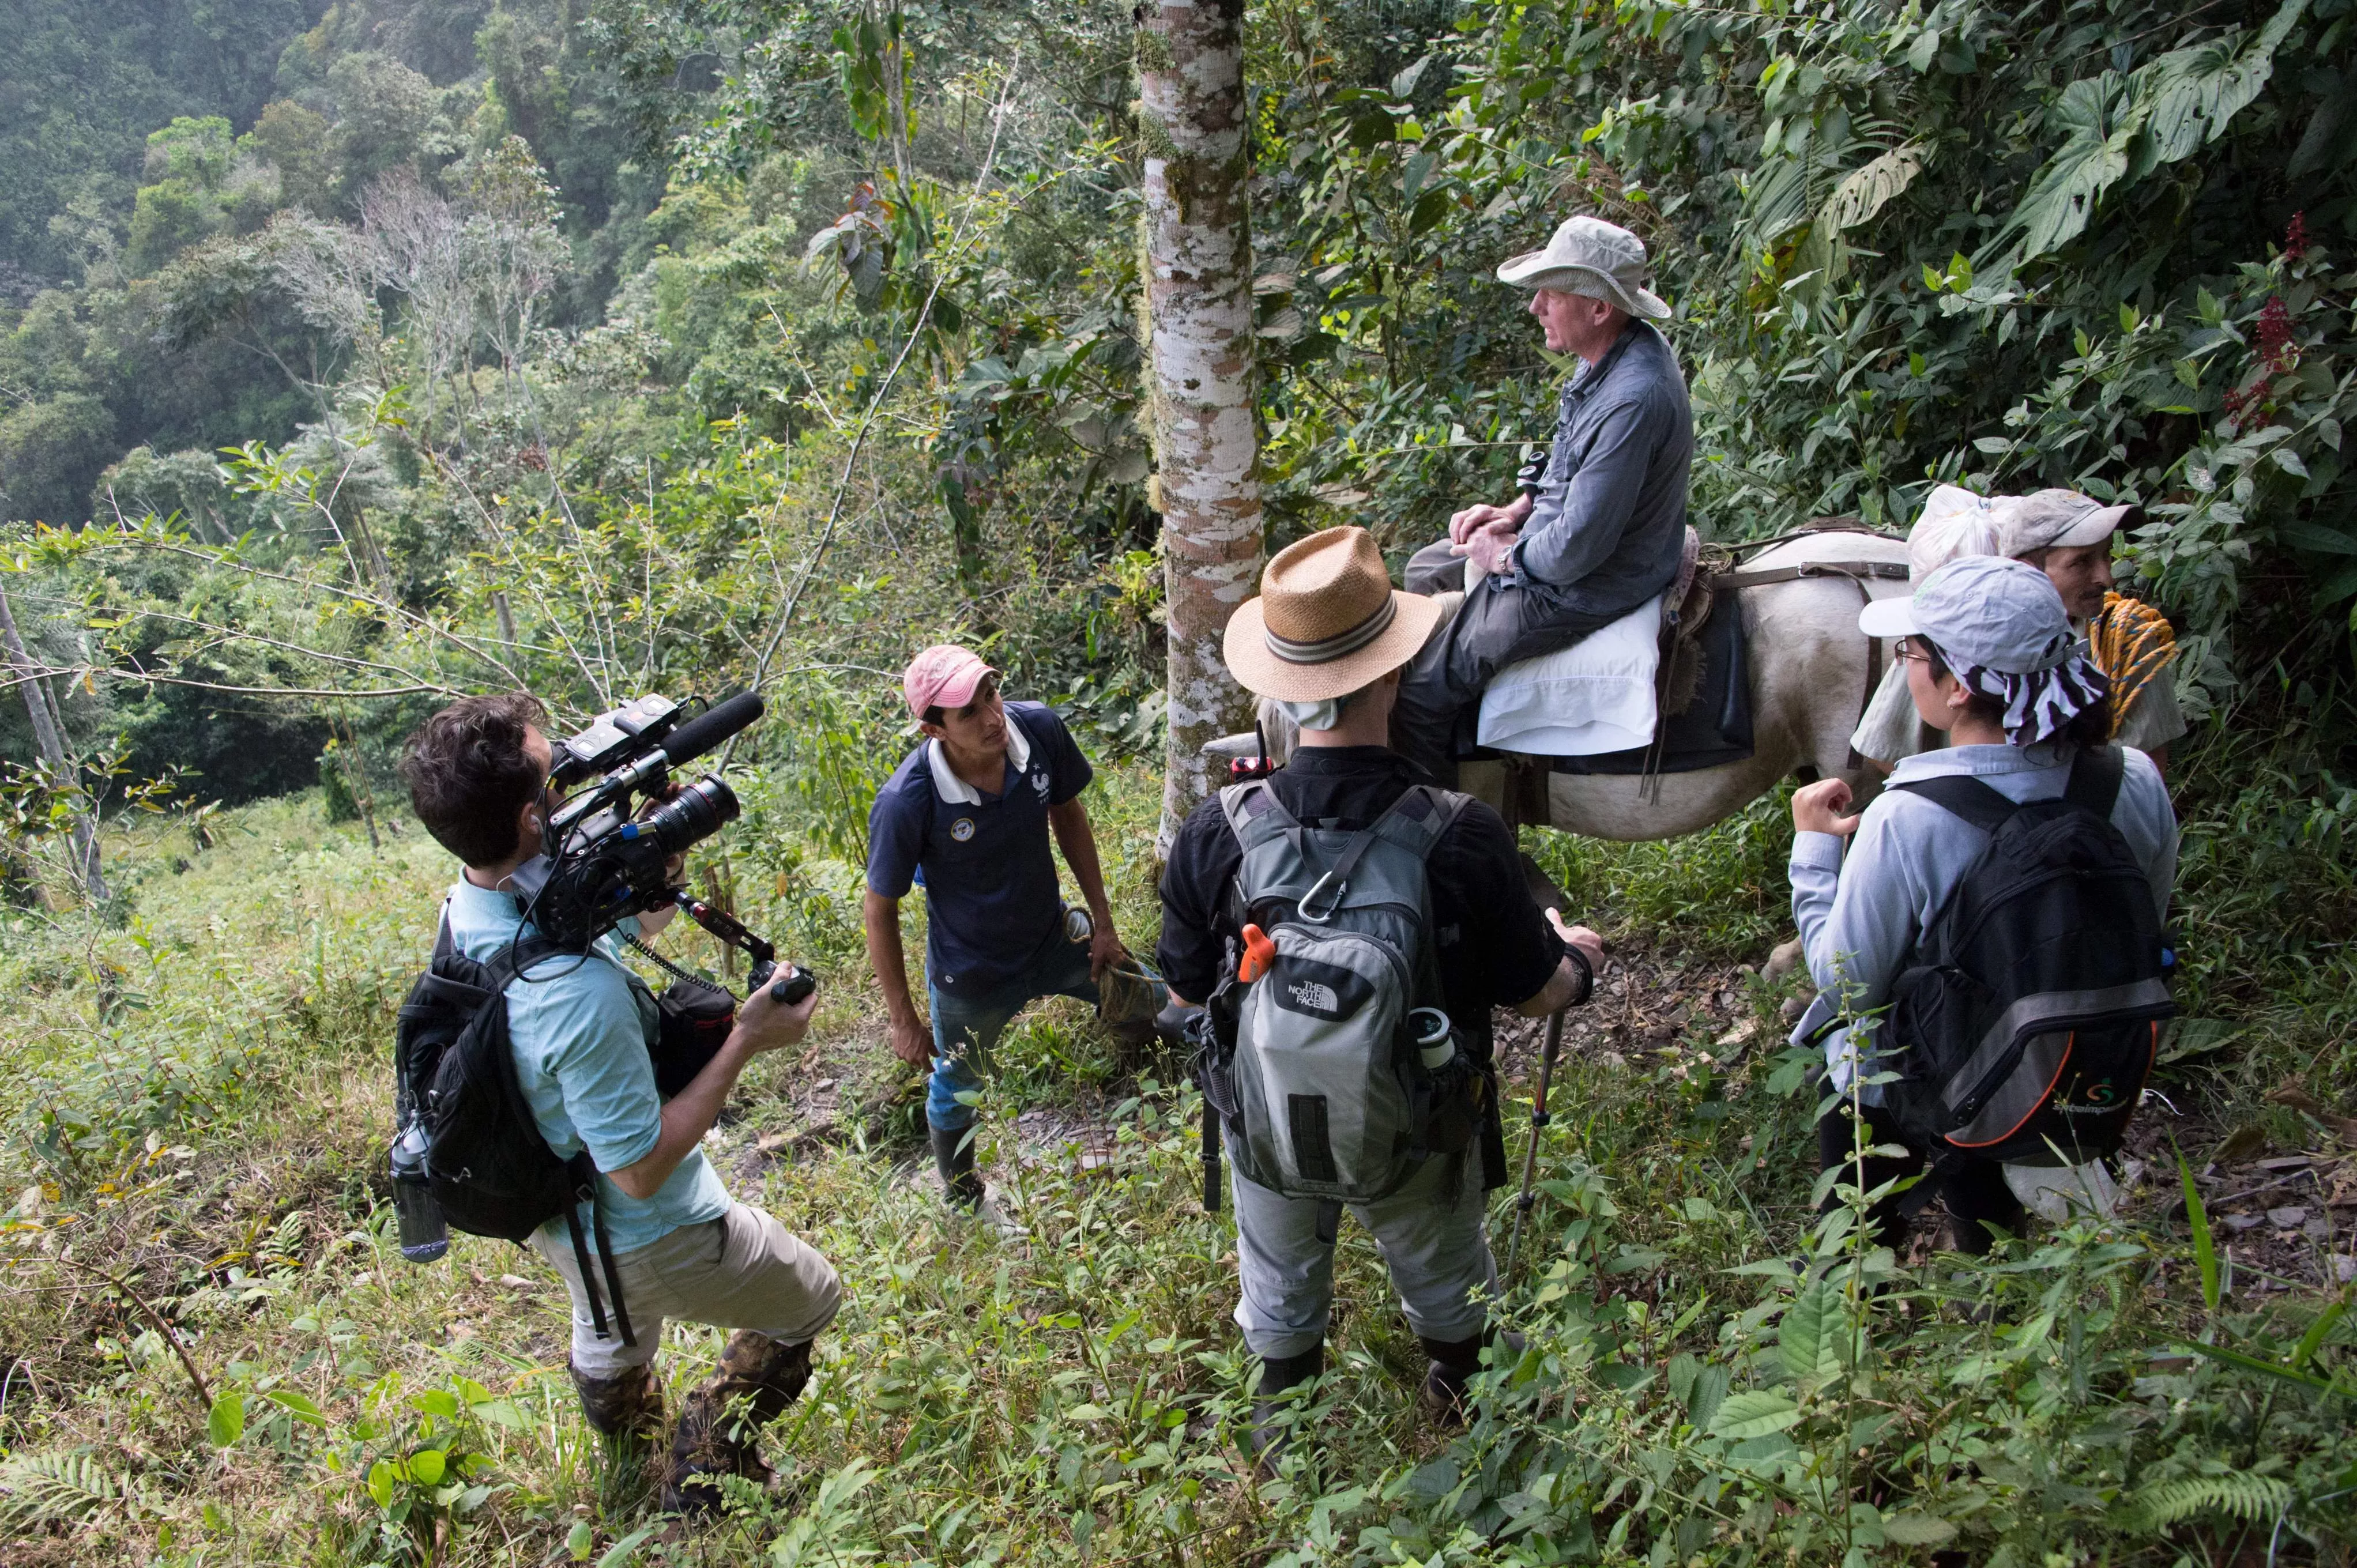 Frank Gardner on horseback talking to a camera crew in the rainforest